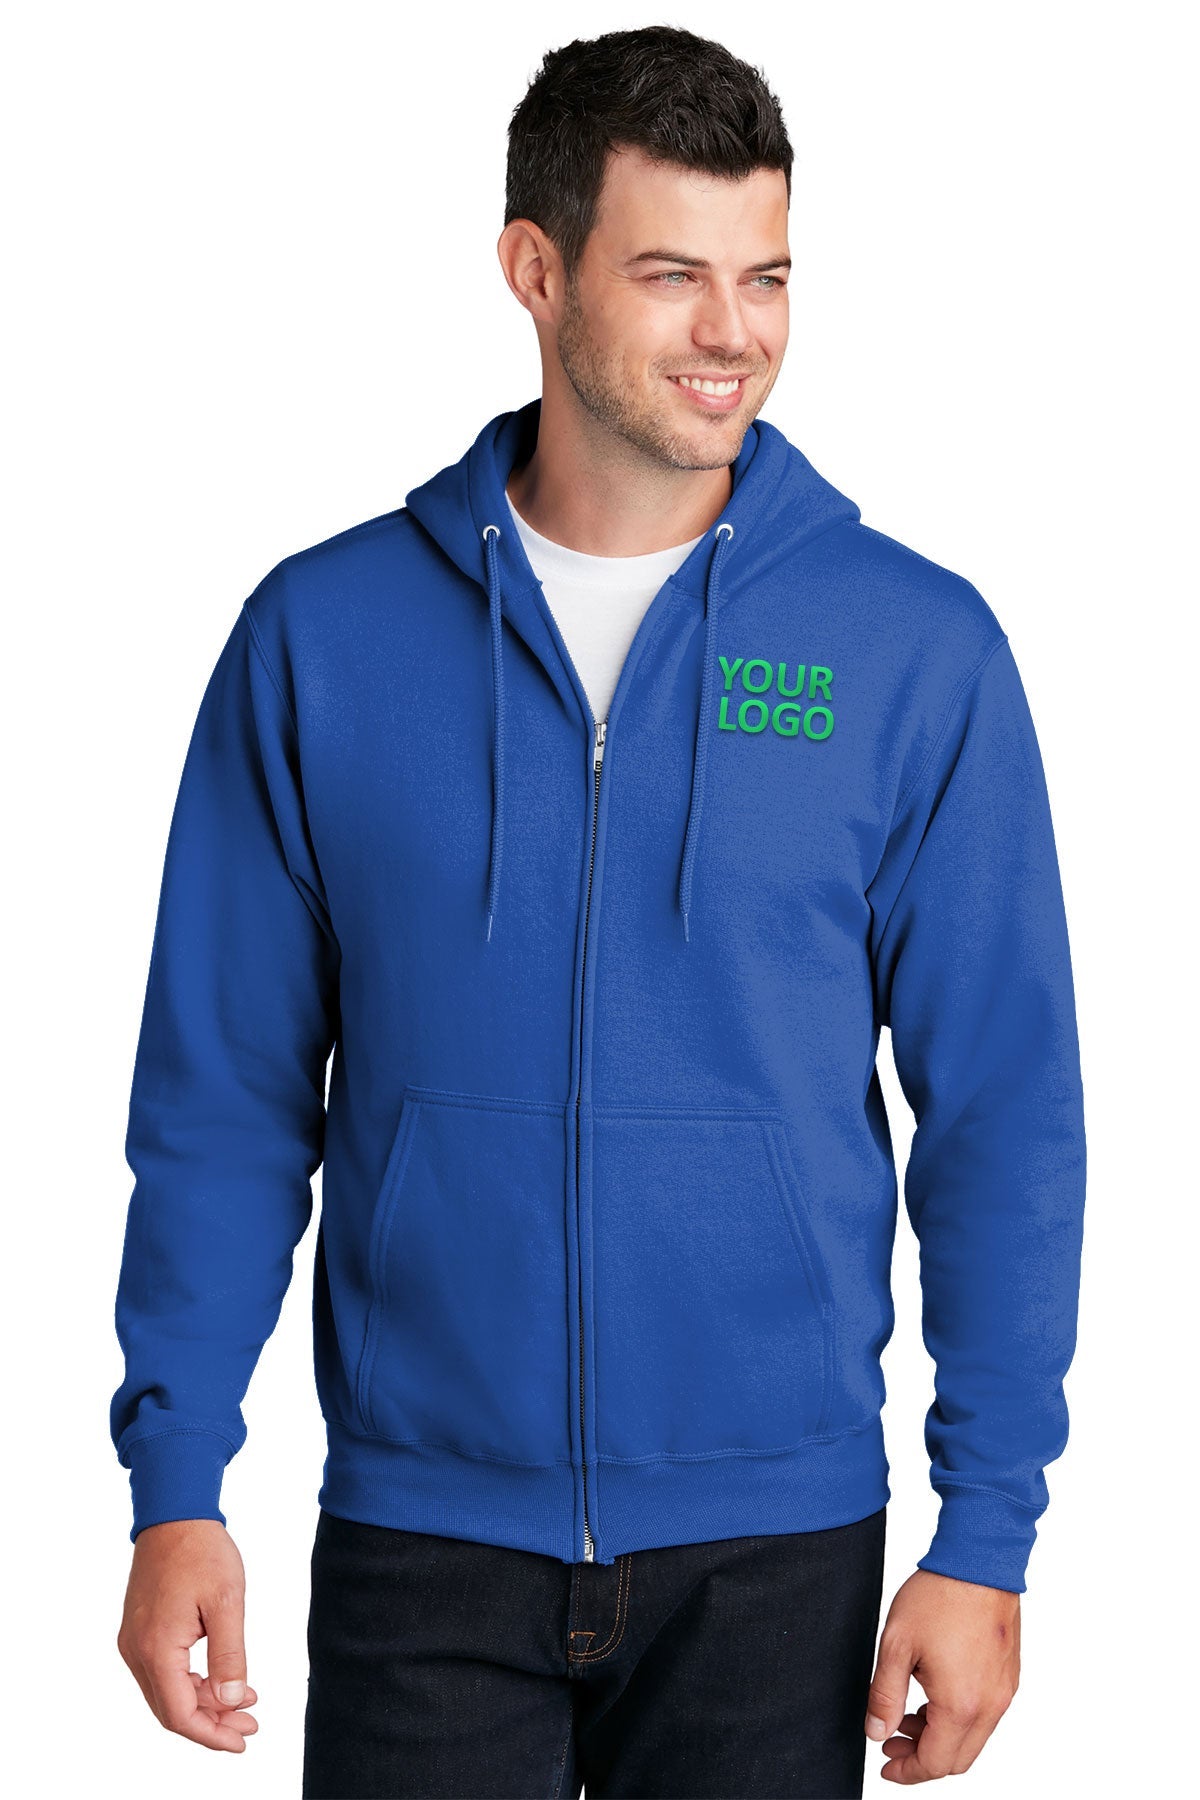 Port & Company Core Fleece Customized Zip Hoodies, Royal